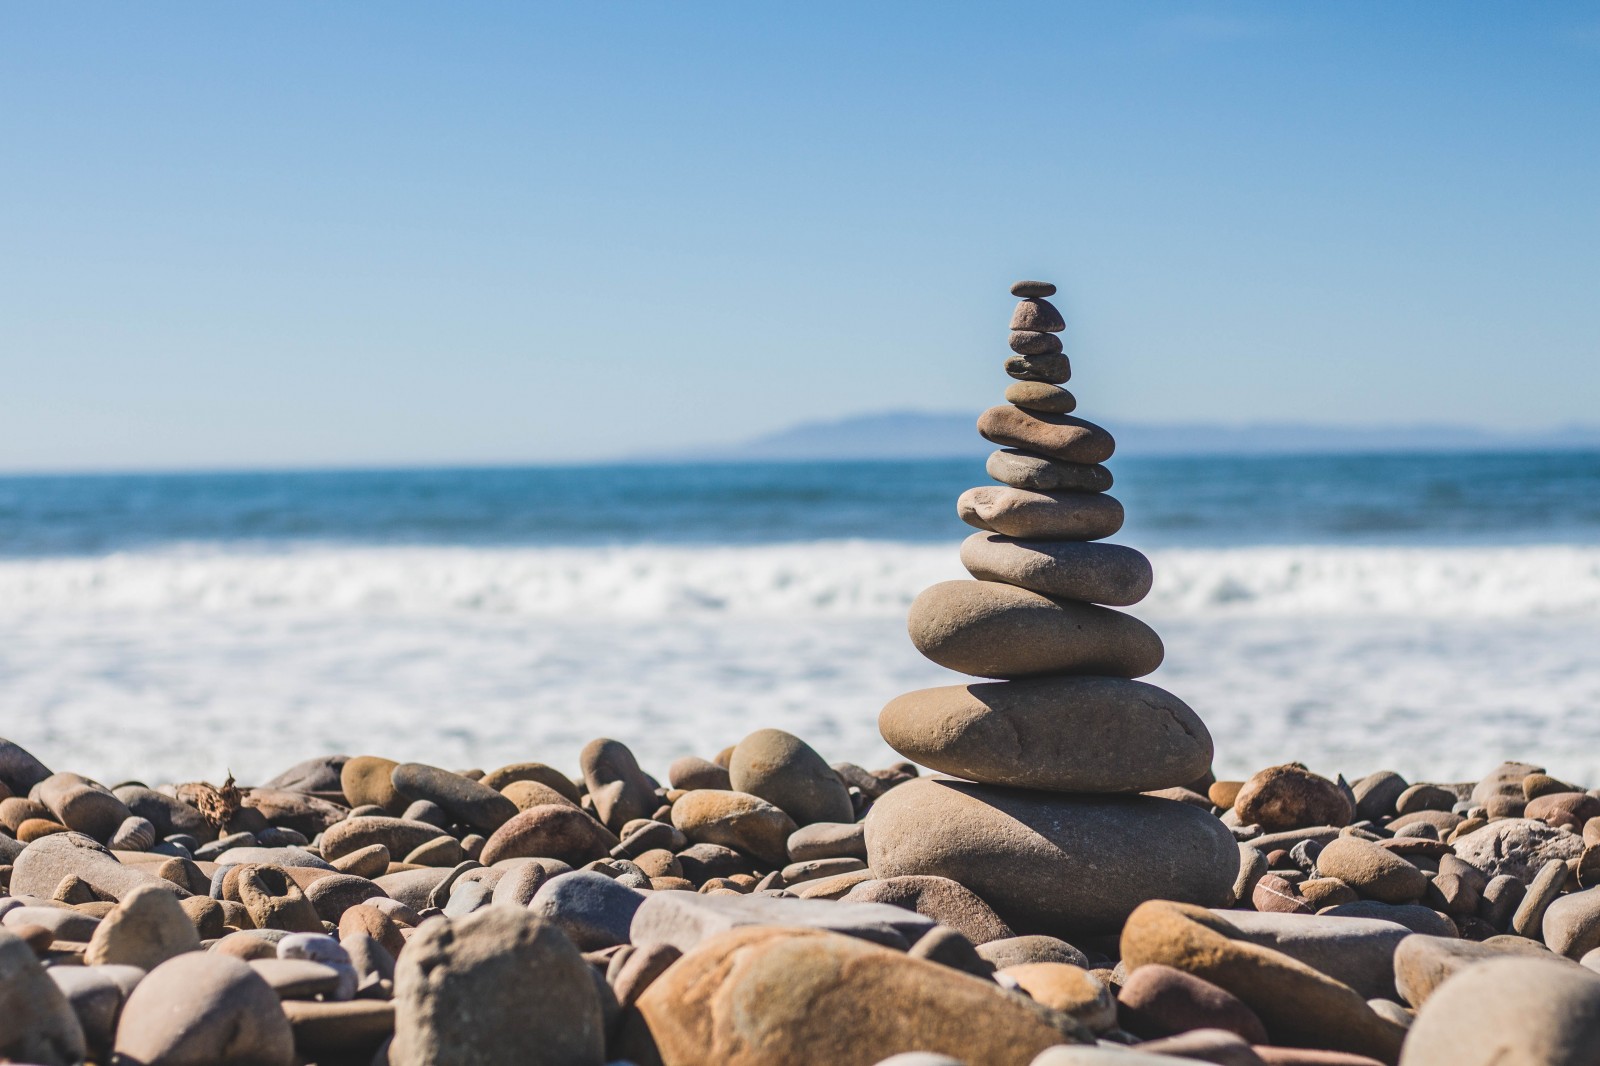 Stones balancing in front of the ocean